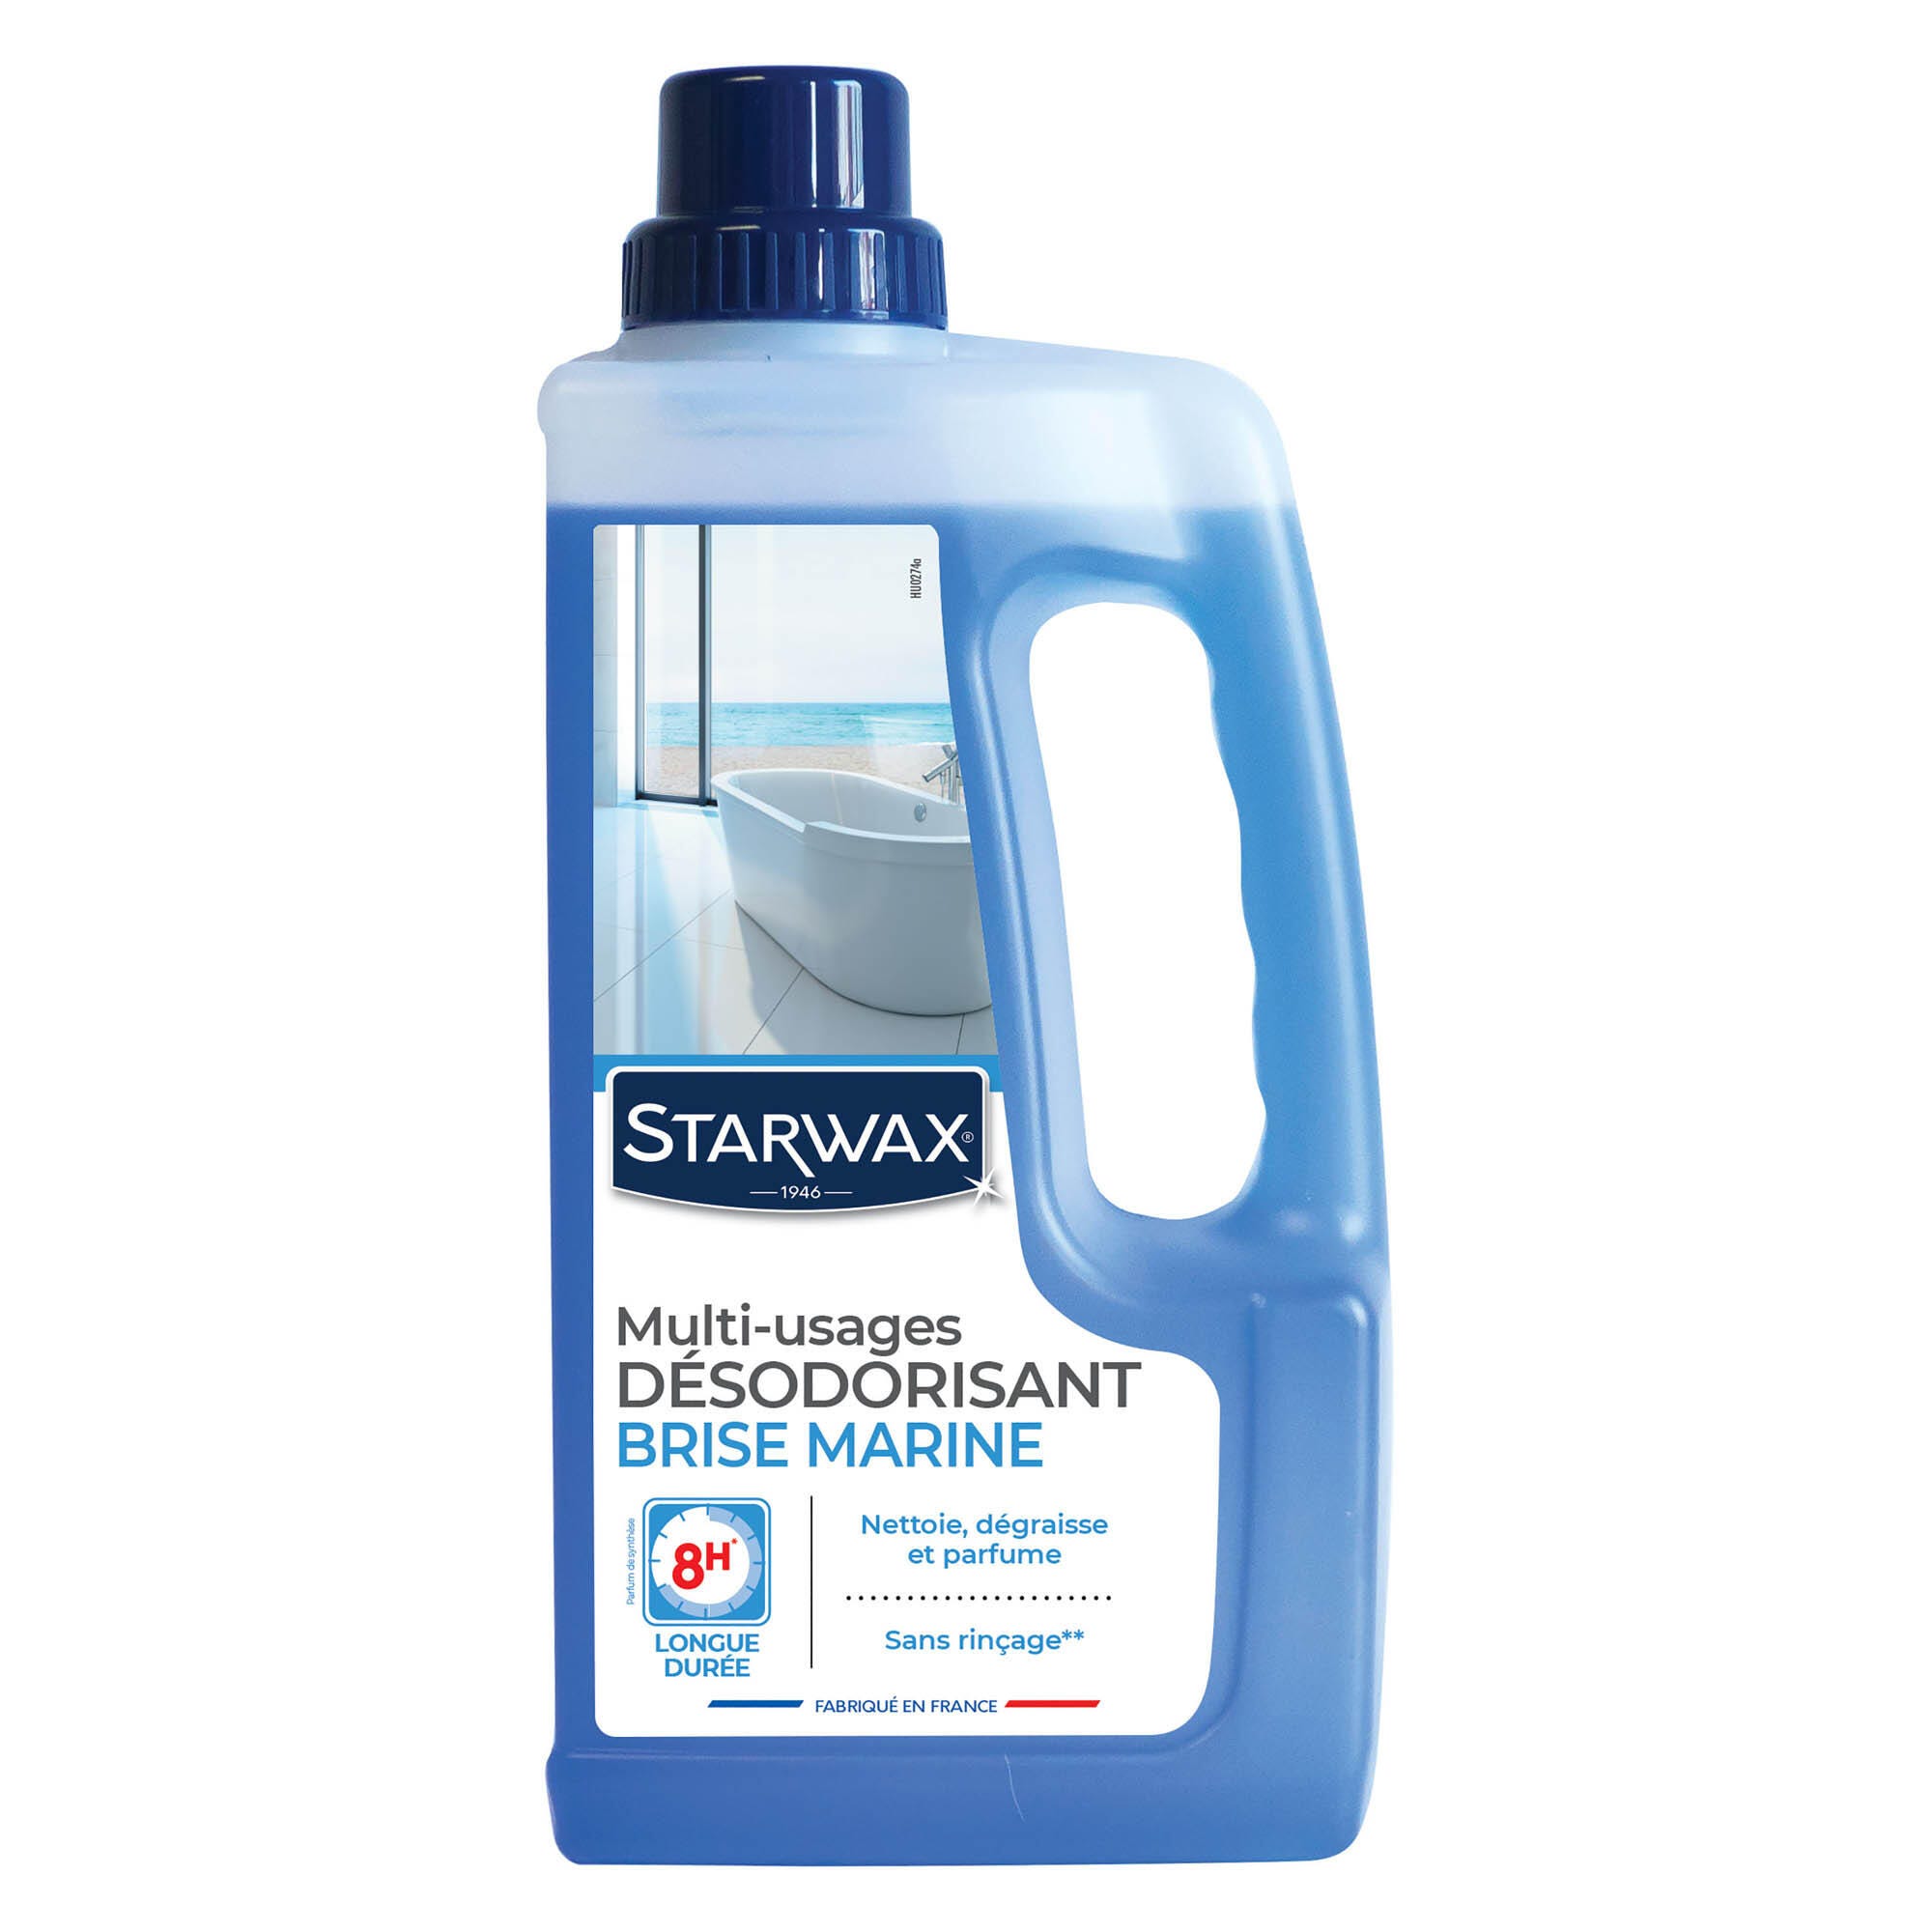 Nettoyant pour wc avec javel, STARWAX, 0.750 L